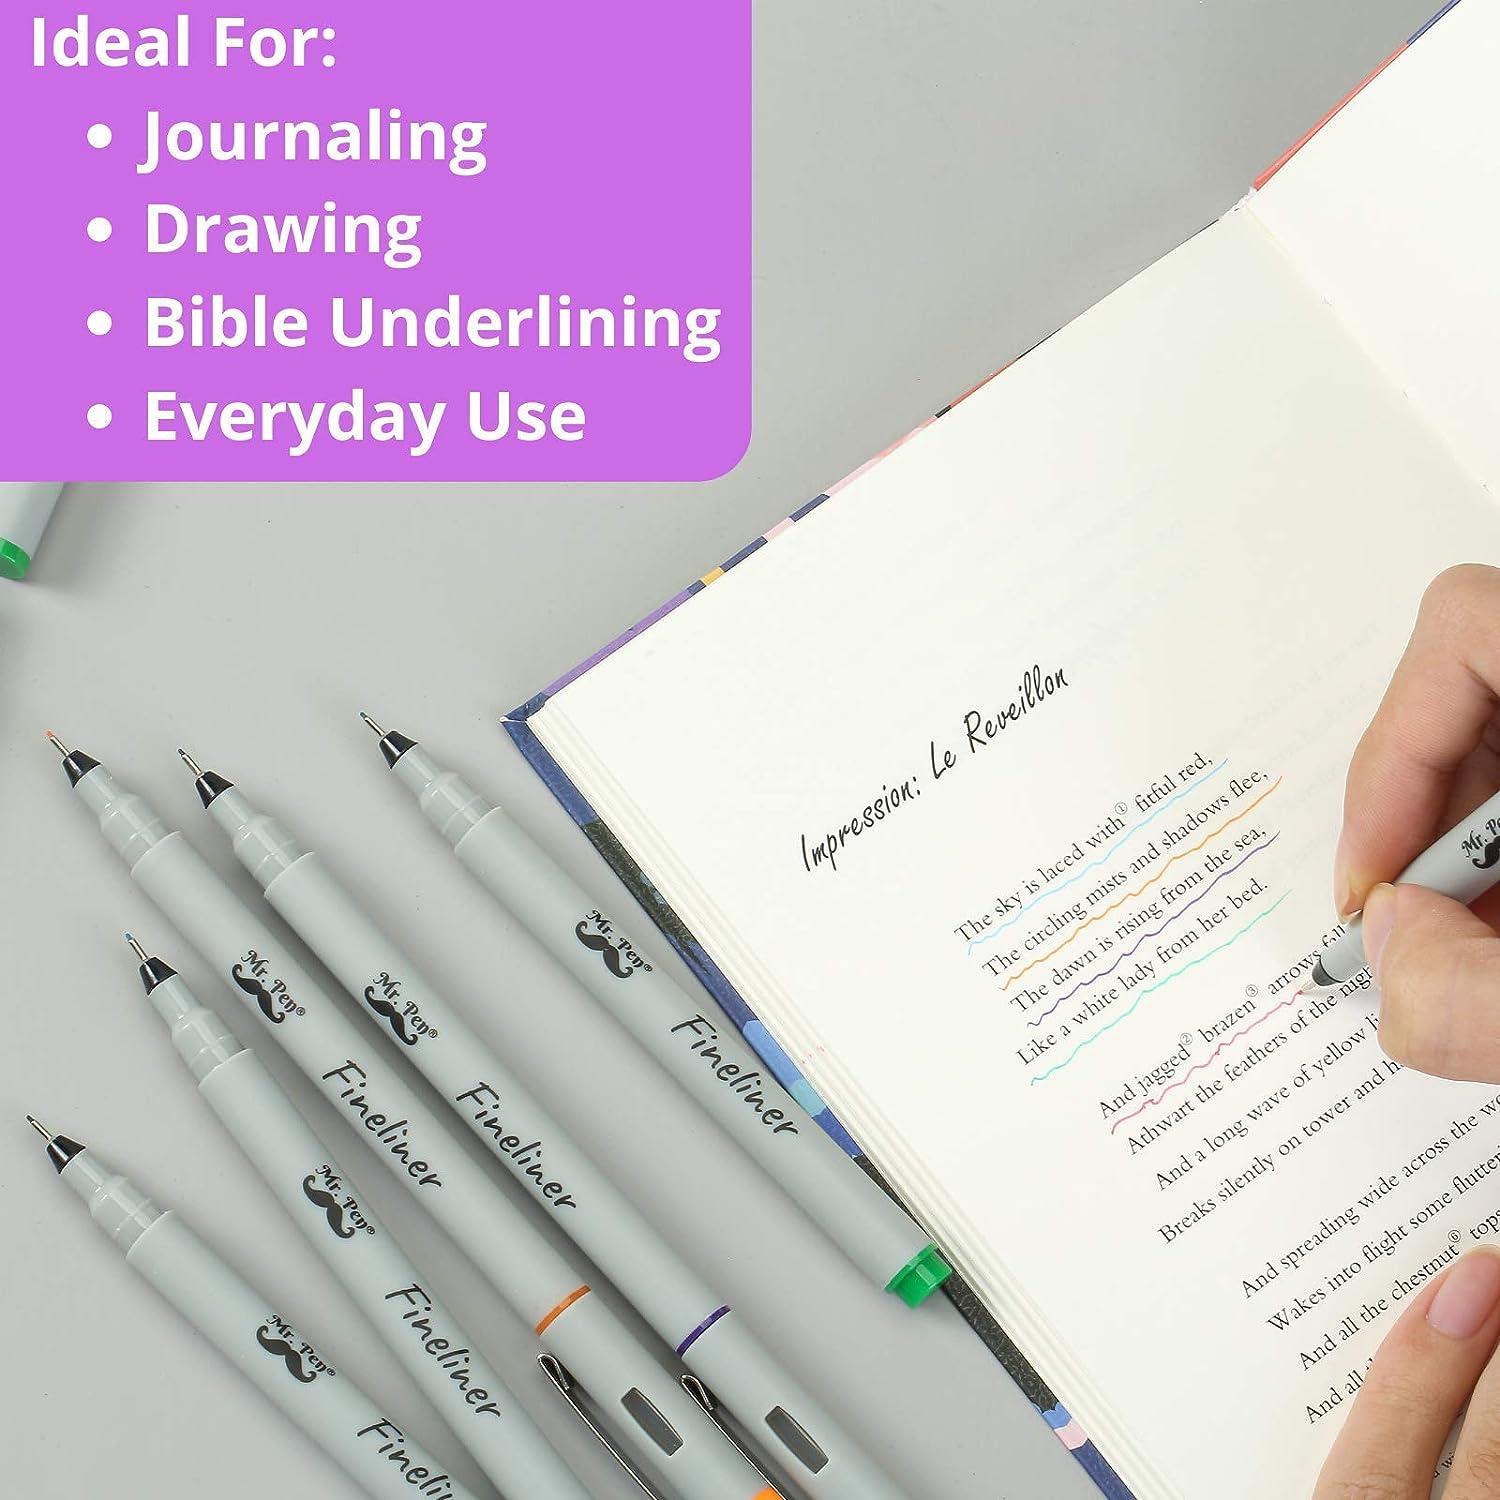 Mr. Pen- Fineliner Pastel Pens, 12 Pack, Pastel Colors, No Bleed Fine Point  Pen, No Smudge Fine Tip Markers, Bible / Journal Pens, Drawing / Note